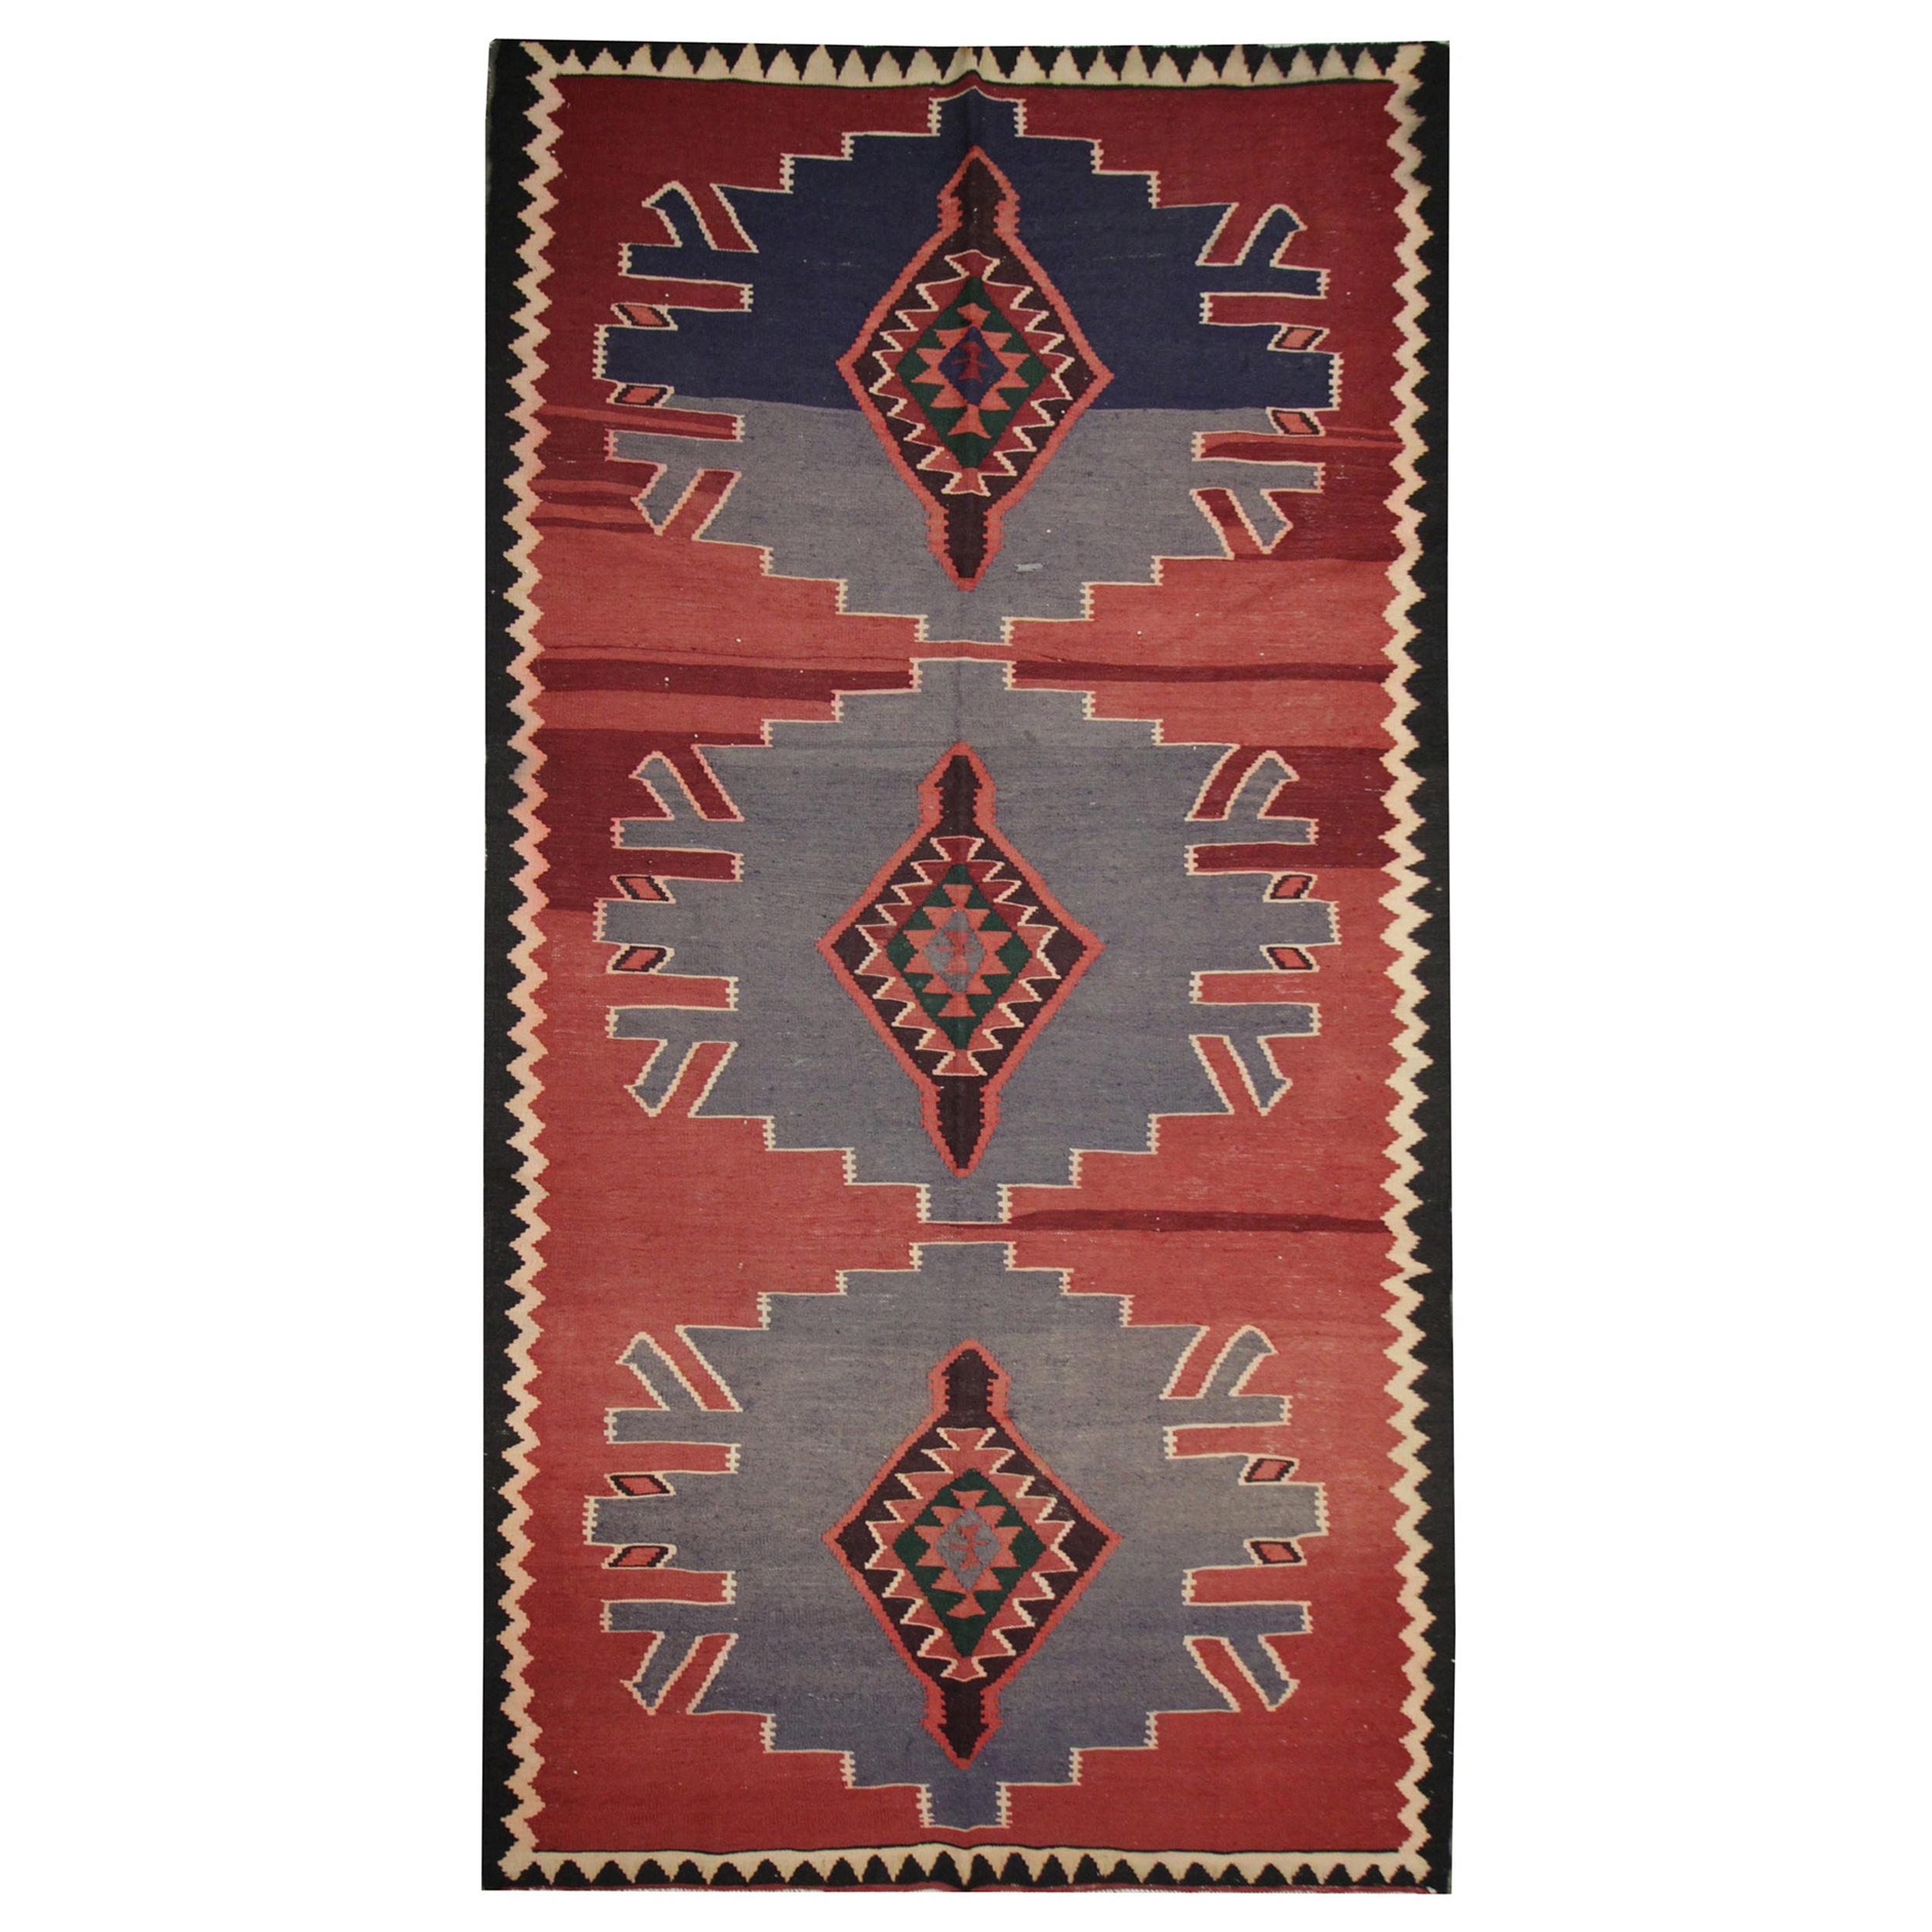 Traditional Kilims Tribal Wool Kilim Rug Vintage Red Blue Area Rug